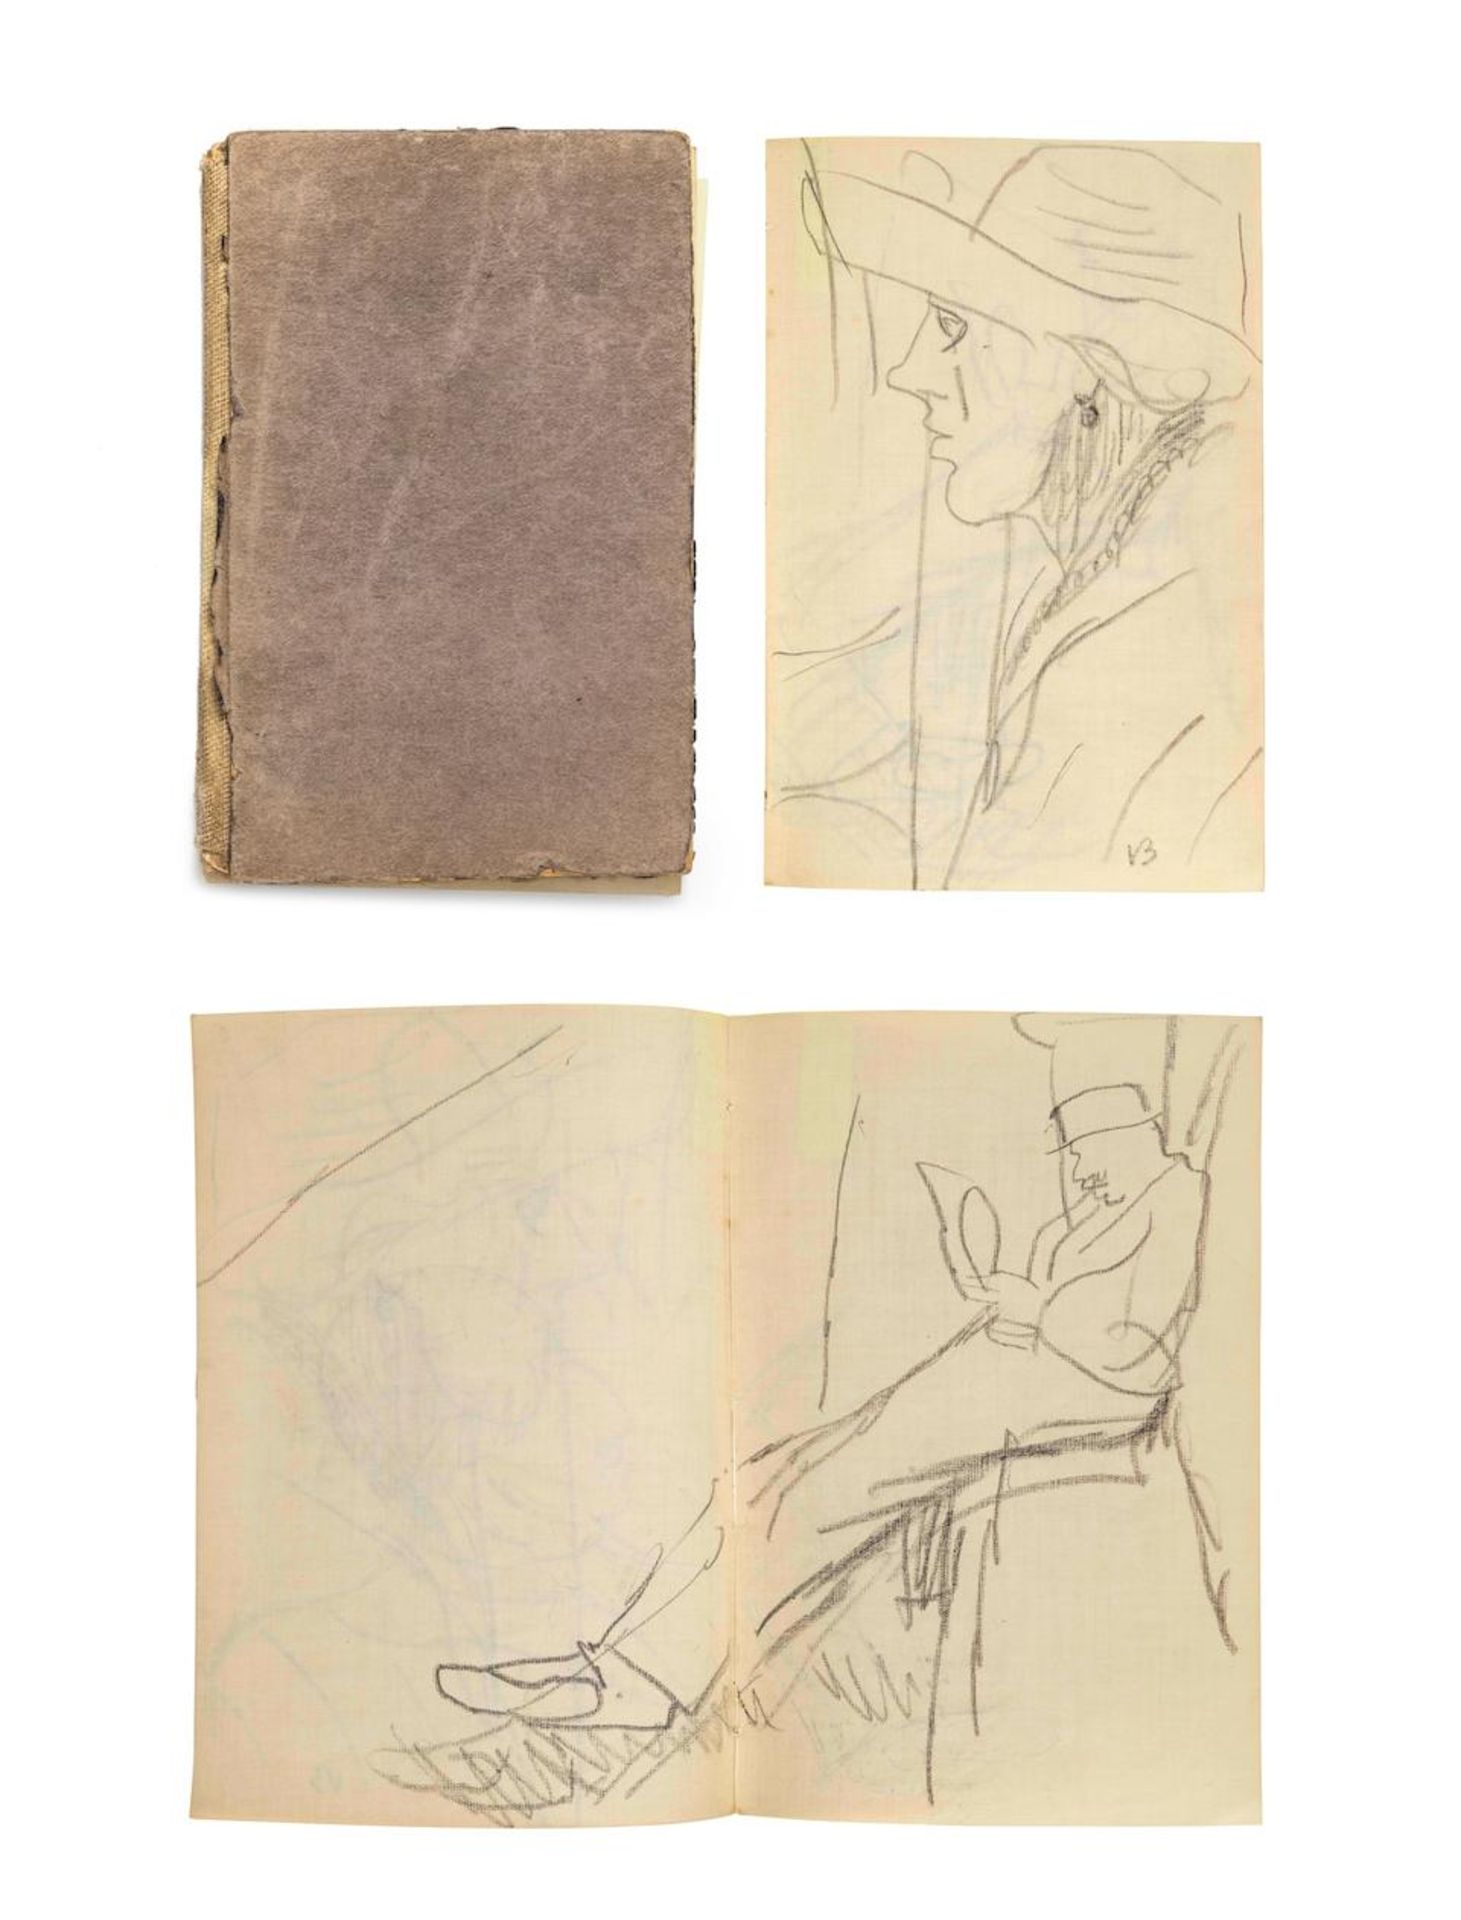 Duncan Grant (British, 1885-1978) Sketchbook (Rome) 1920 16.5 x 10.8 cm. (6 1/2 x 4 1/4 in.)